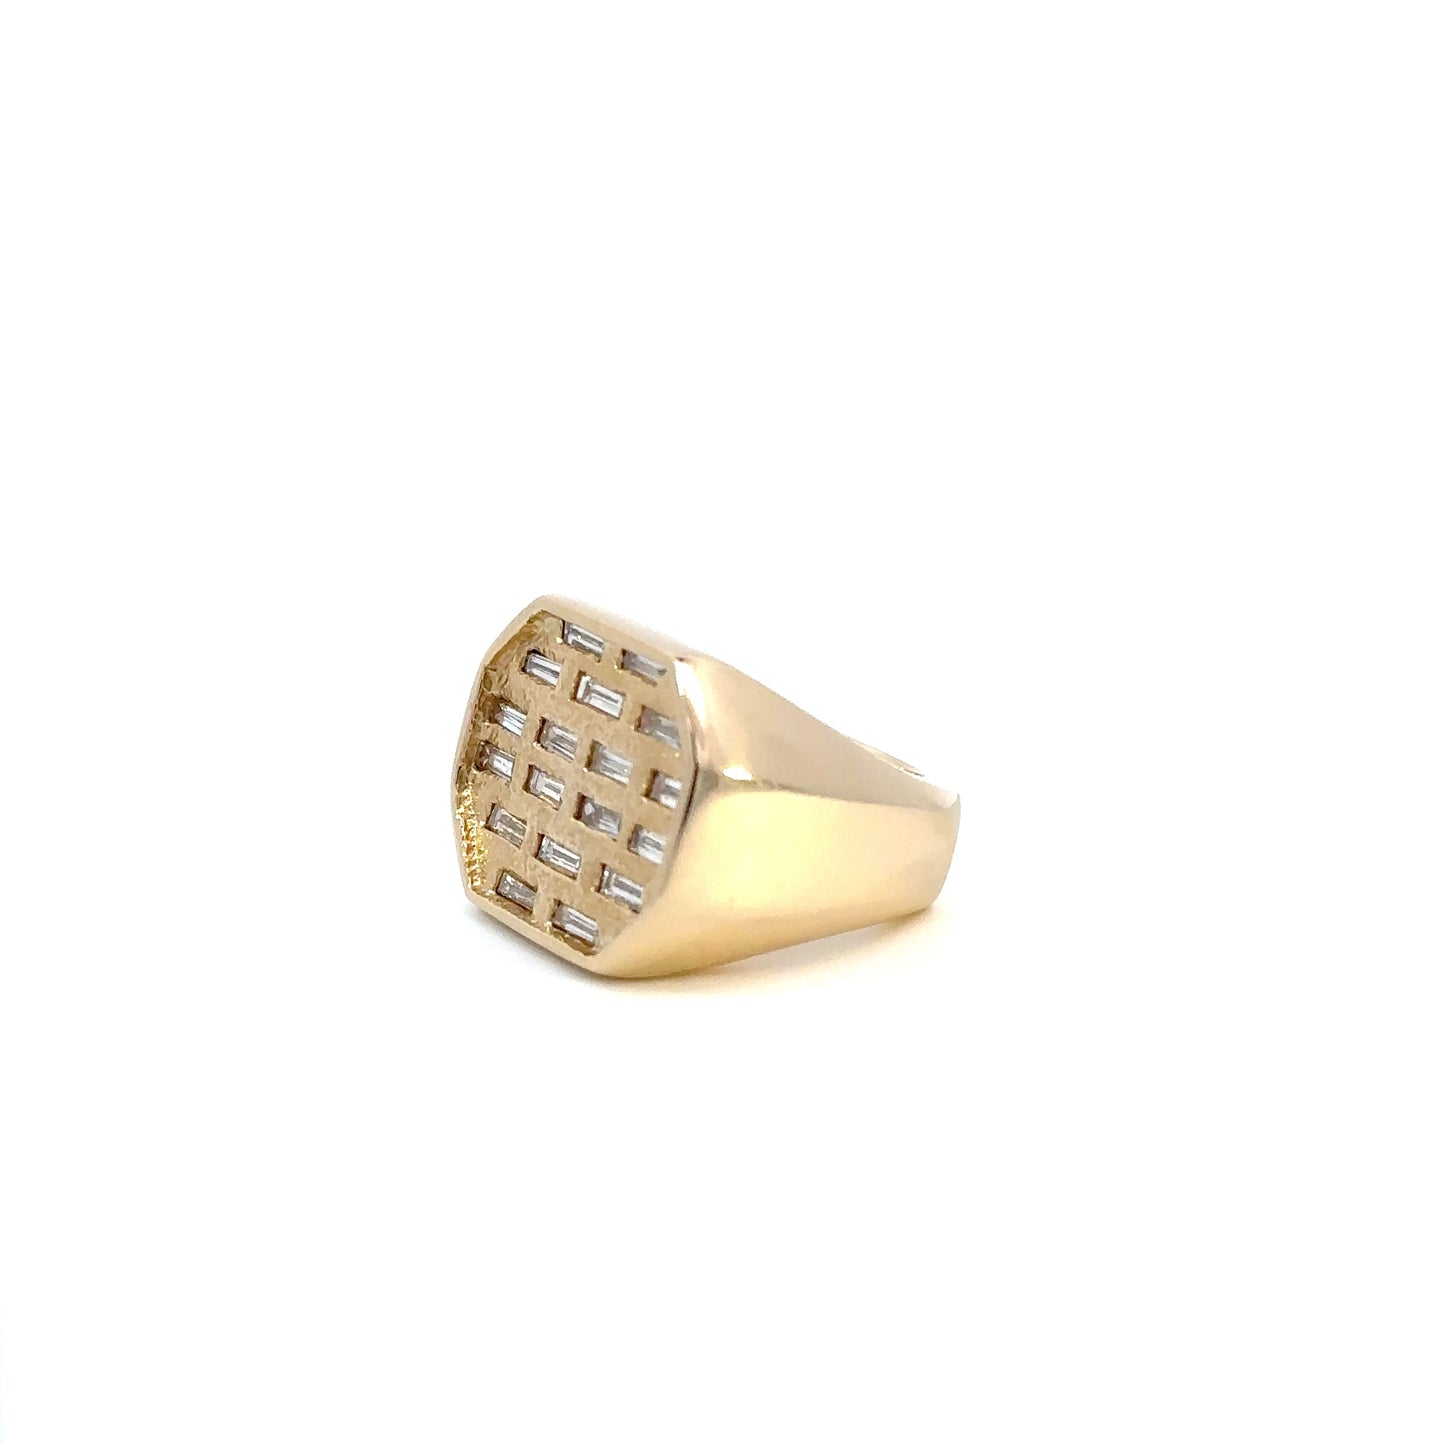 The Honeycomb - 14KY Men's Ring, 1.89ctw H Si1 Diamonds, 32.4g